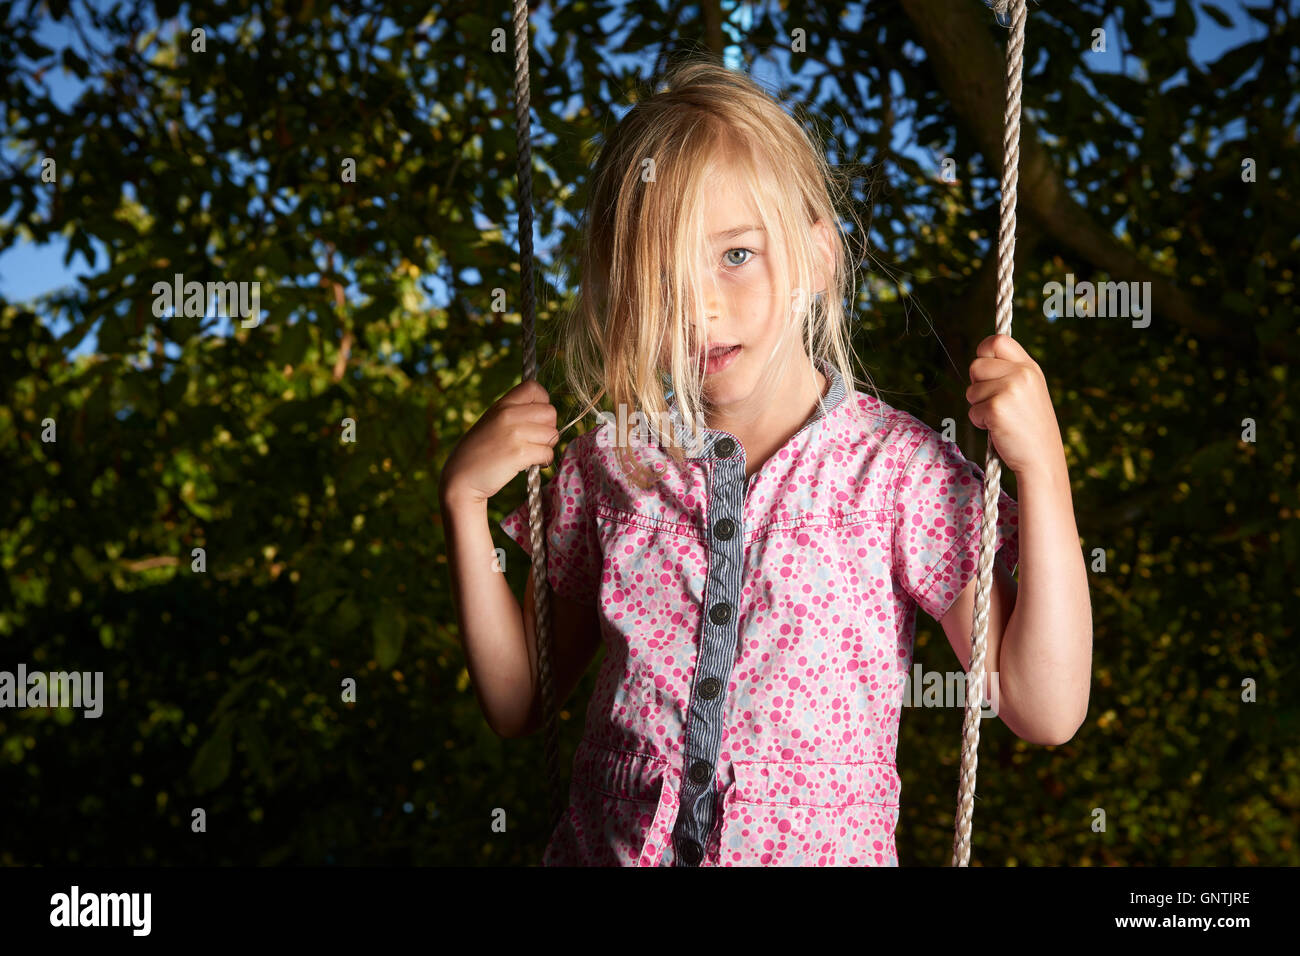 Child blond sad girl standing on swing. Stock Photo